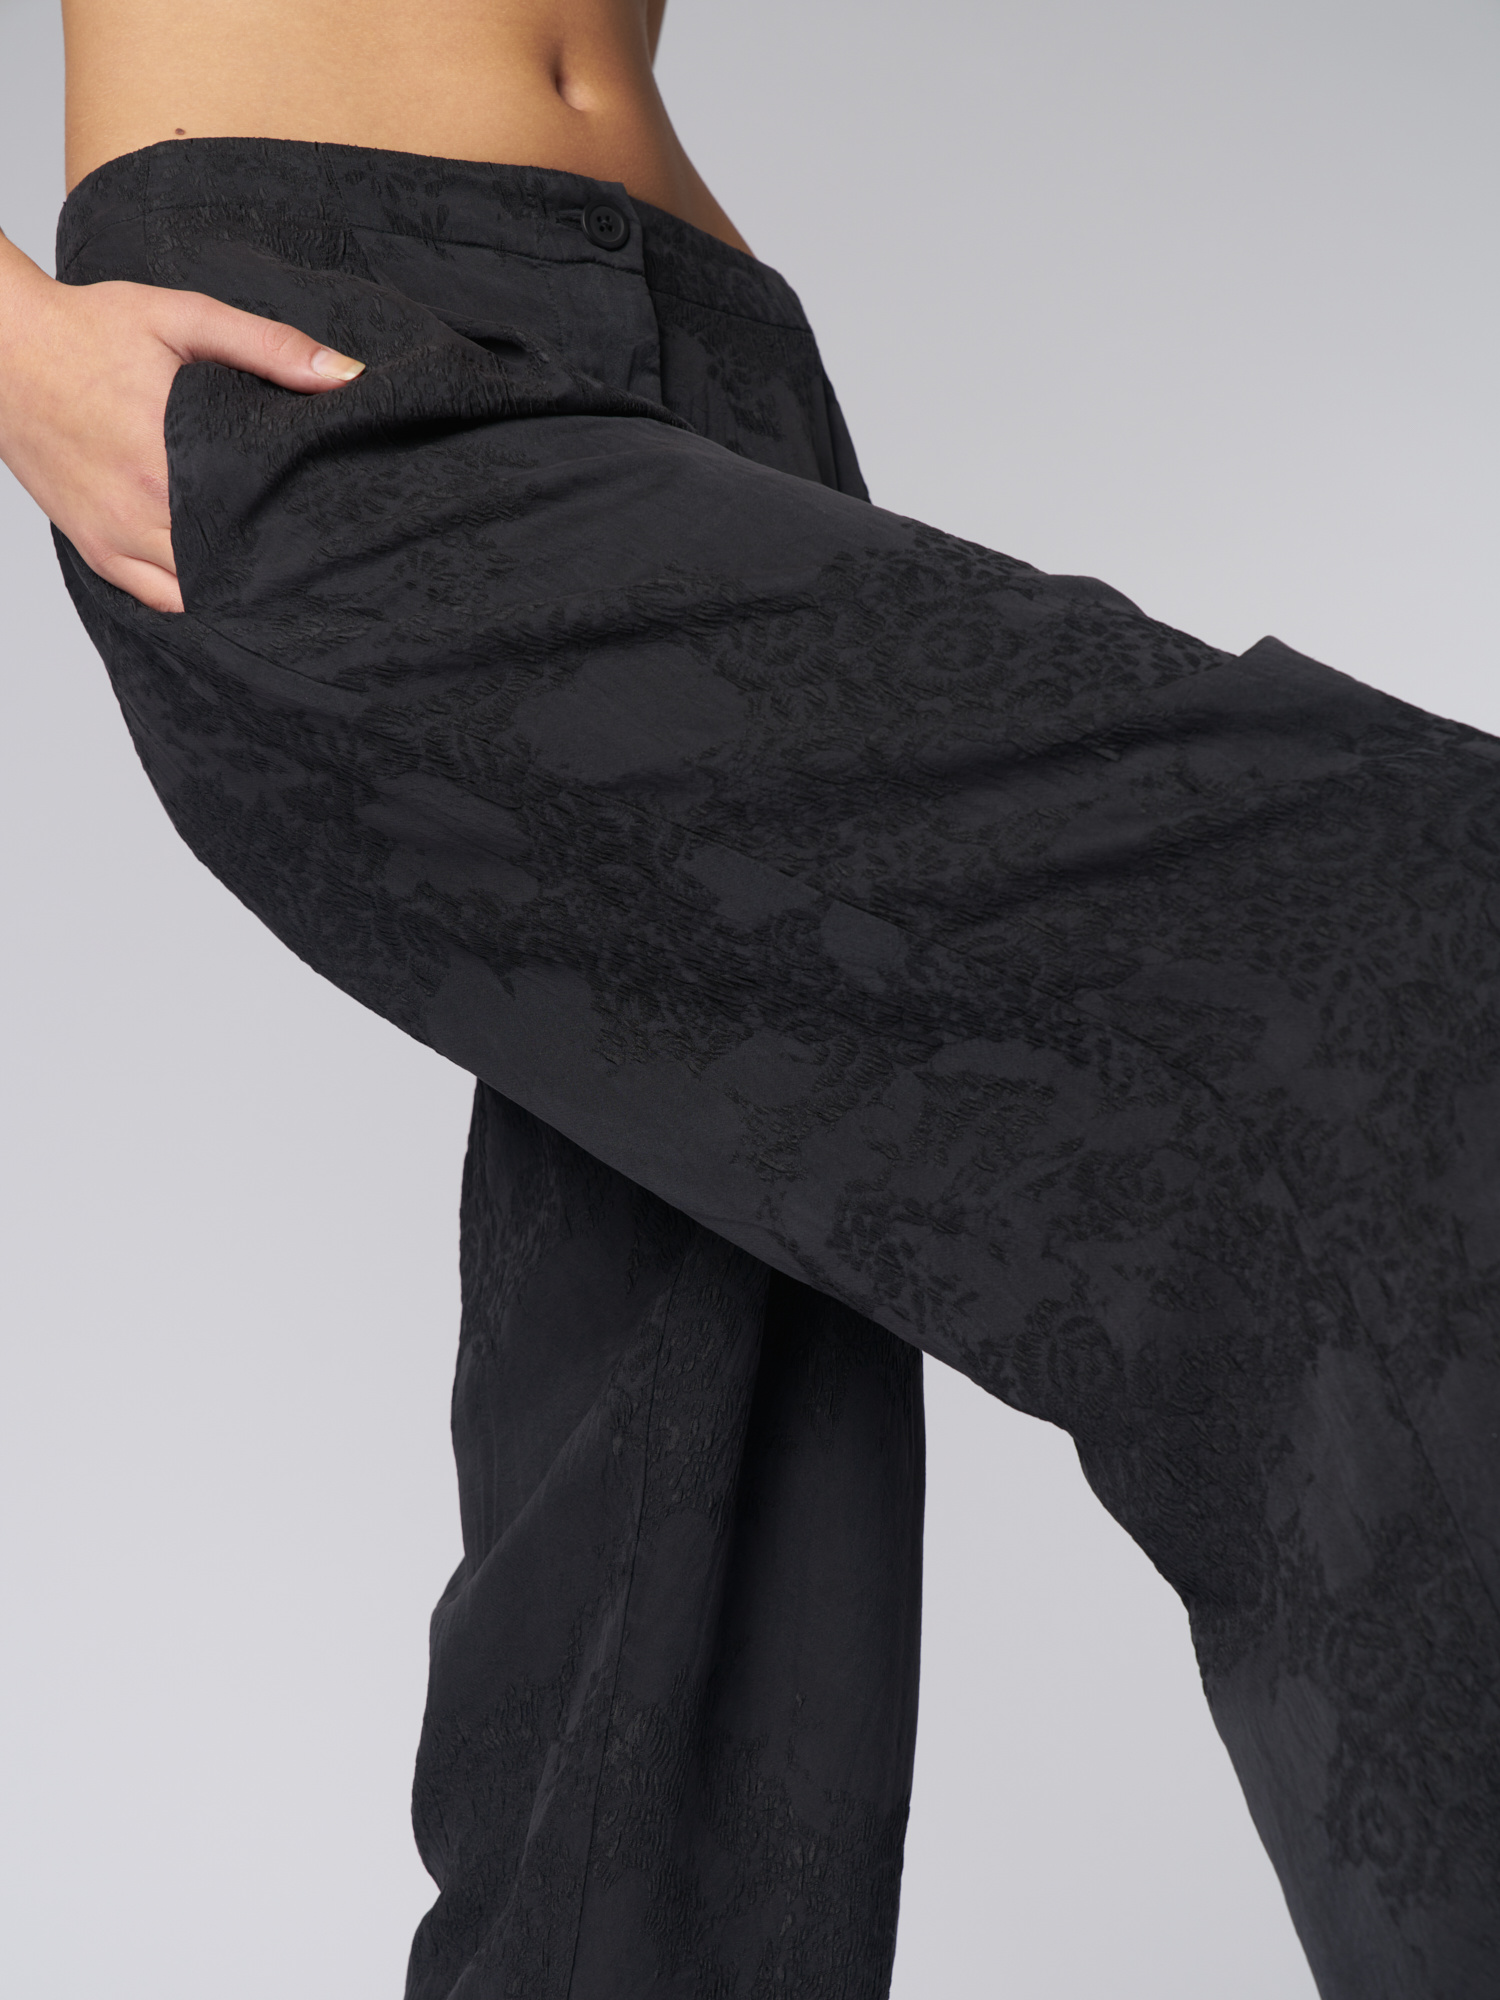 Draper Pants Black - Alhambra  Women's Clothing Boutique, Seattle